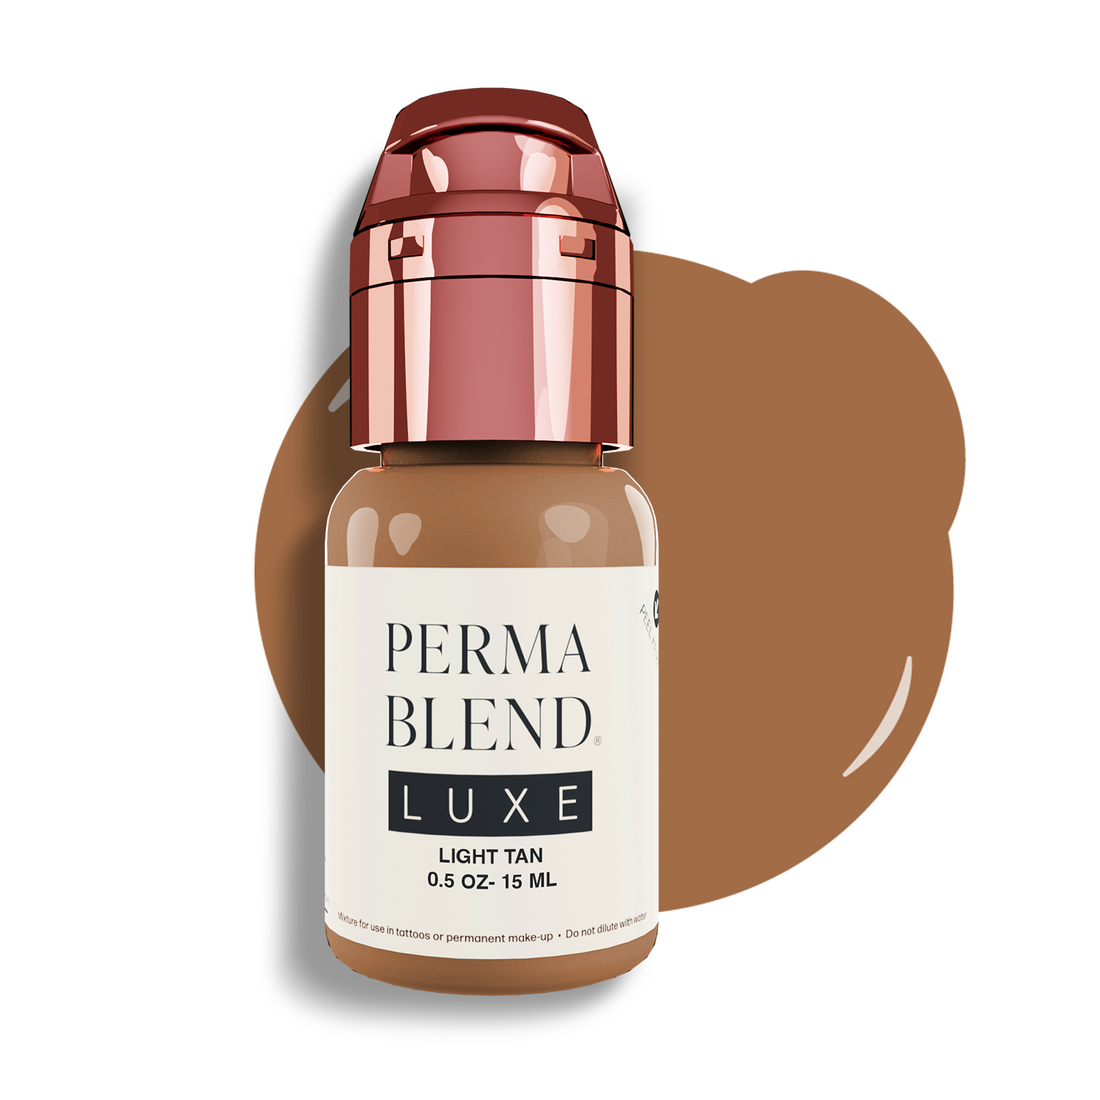 Perma Blend light tan Brows 15 ml